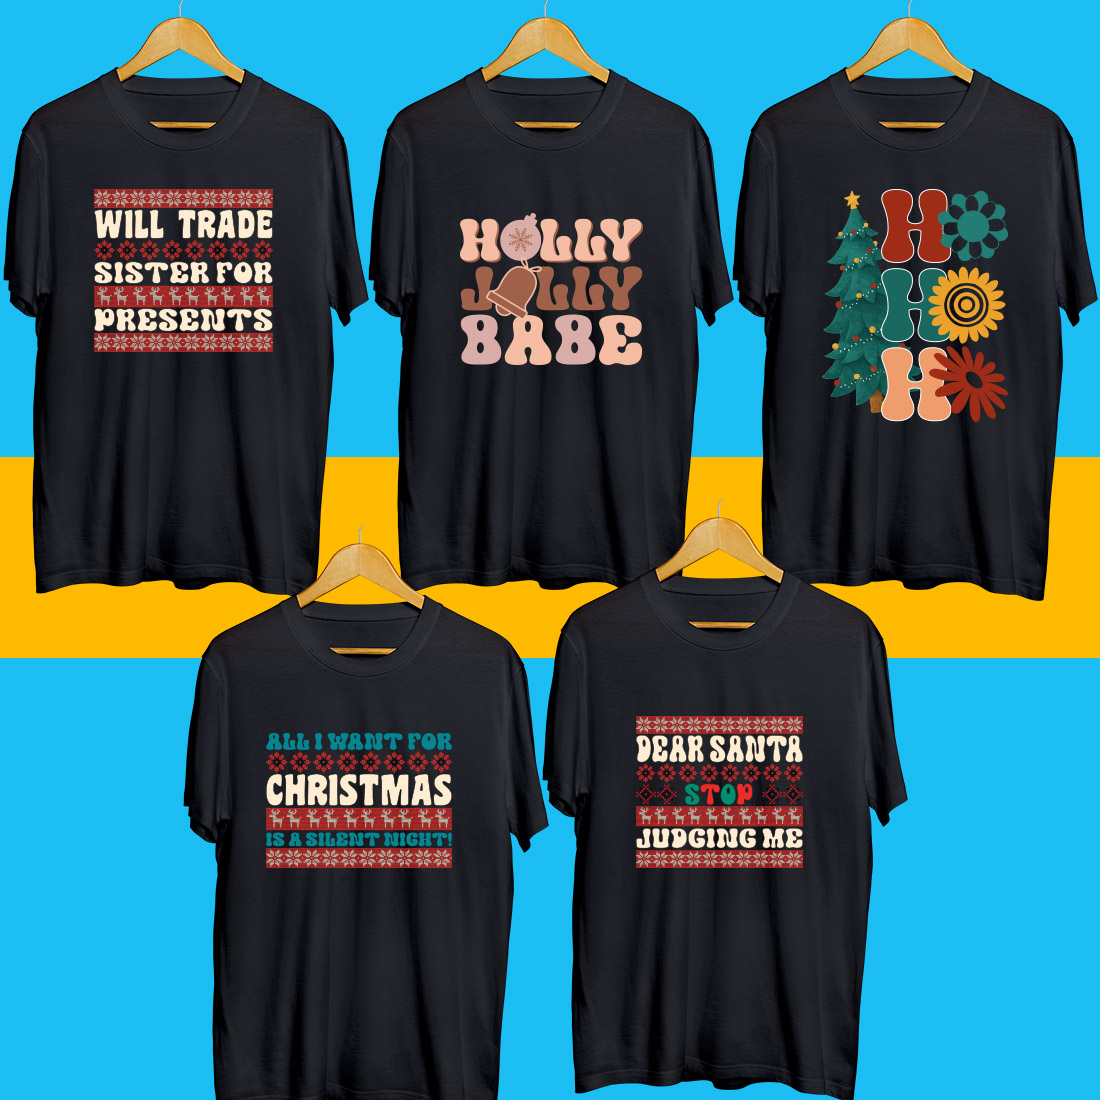 Christmas SVG T Shirt Designs Bundle preview image.